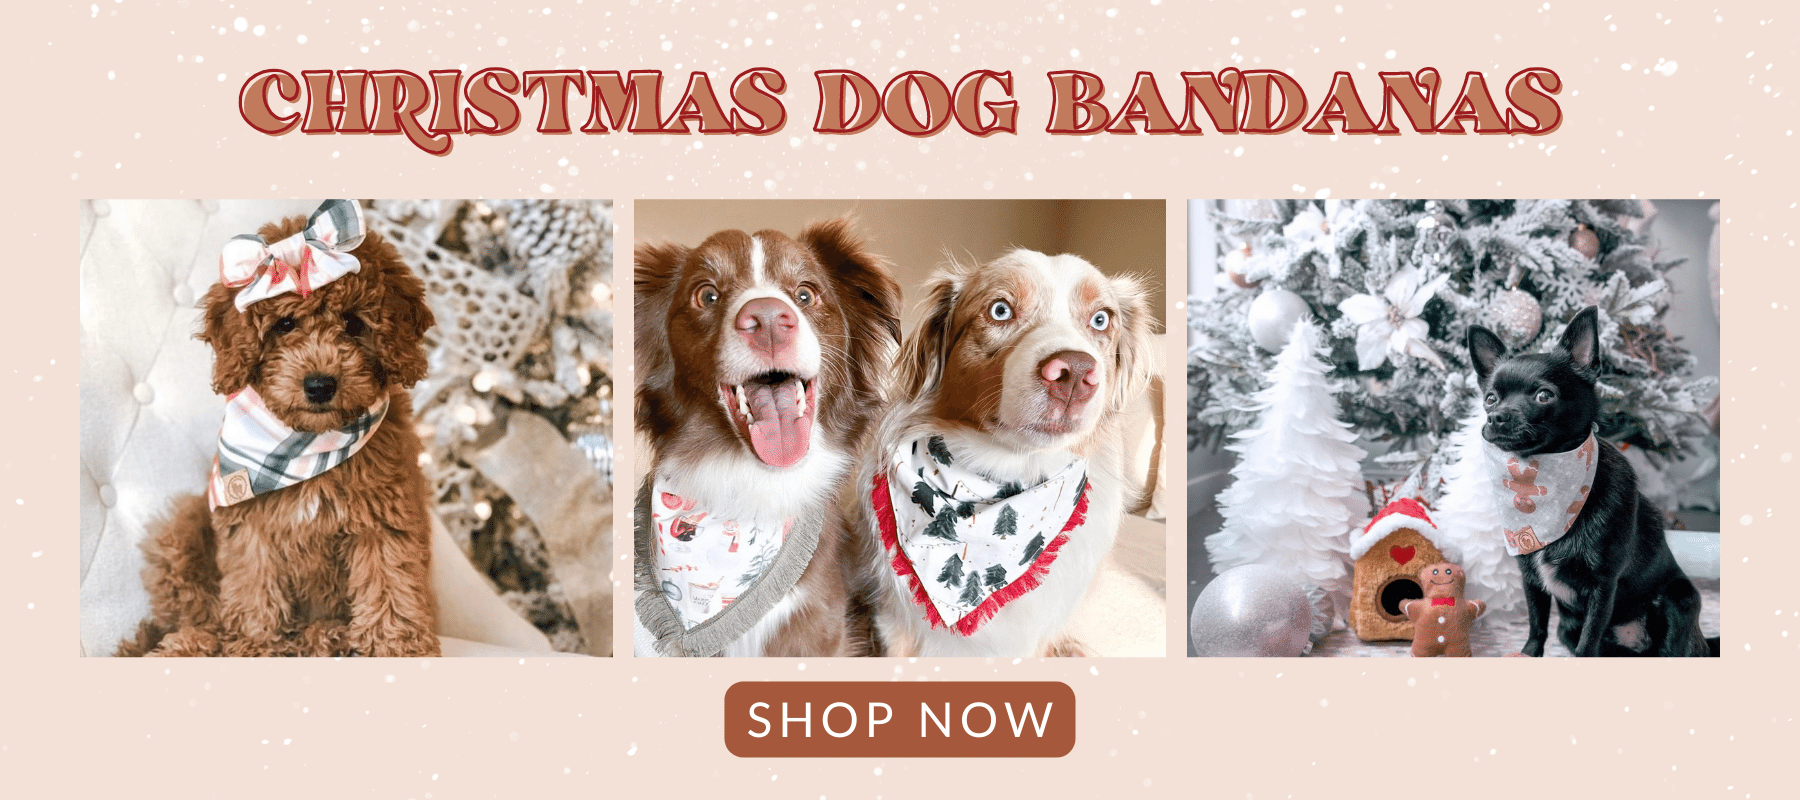 dogs wearing christmas dog bandanas